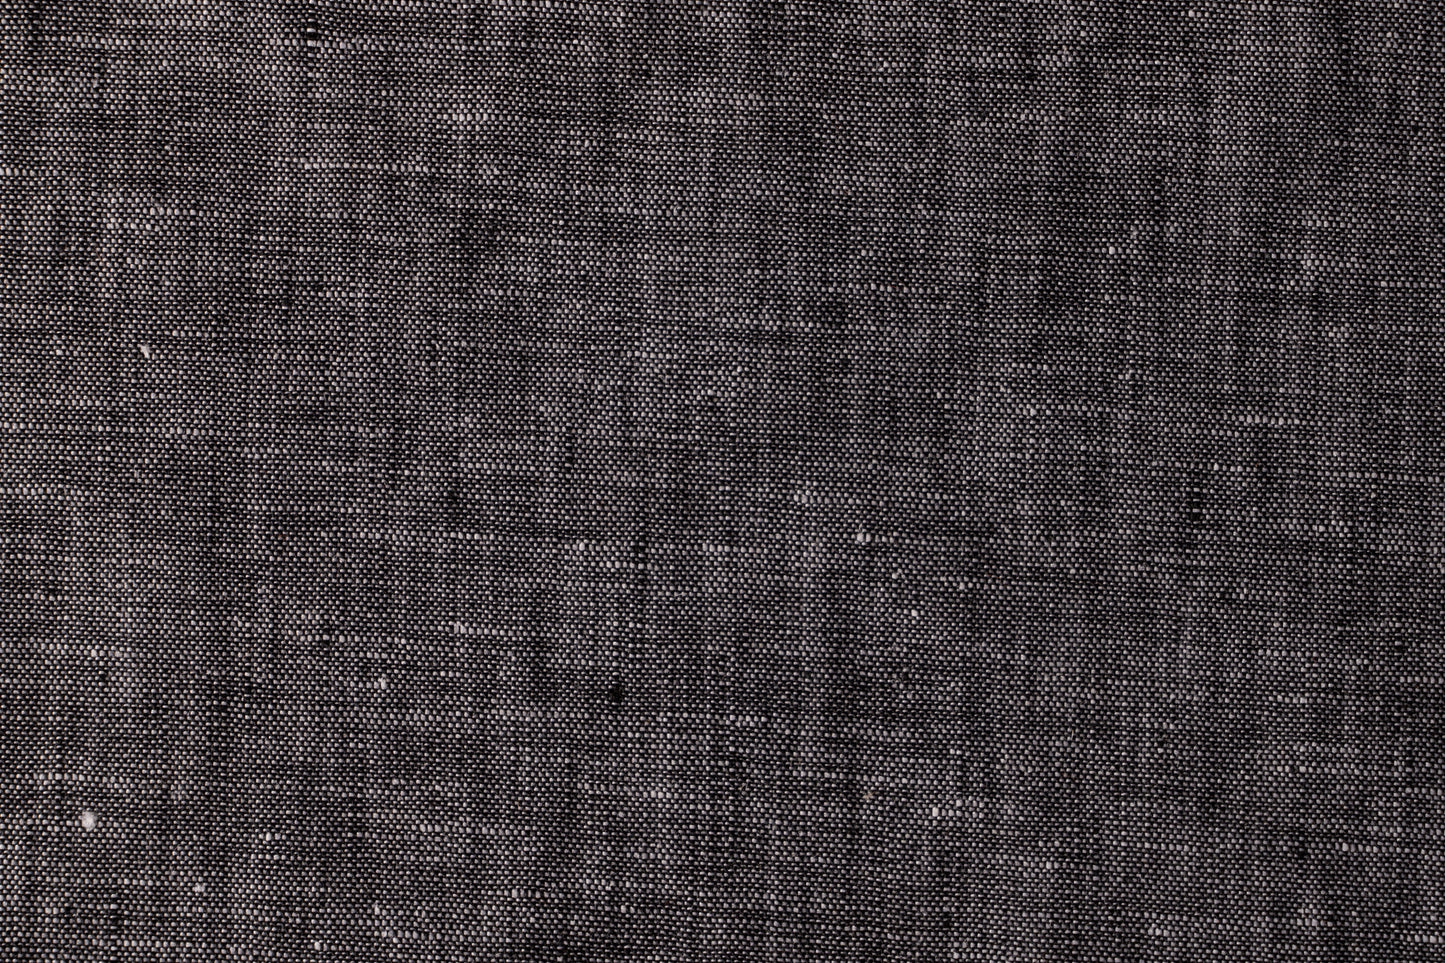 Yarn Dyed Handkerchief Weight 100% Linen (3.7 oz/square yard) Swatch